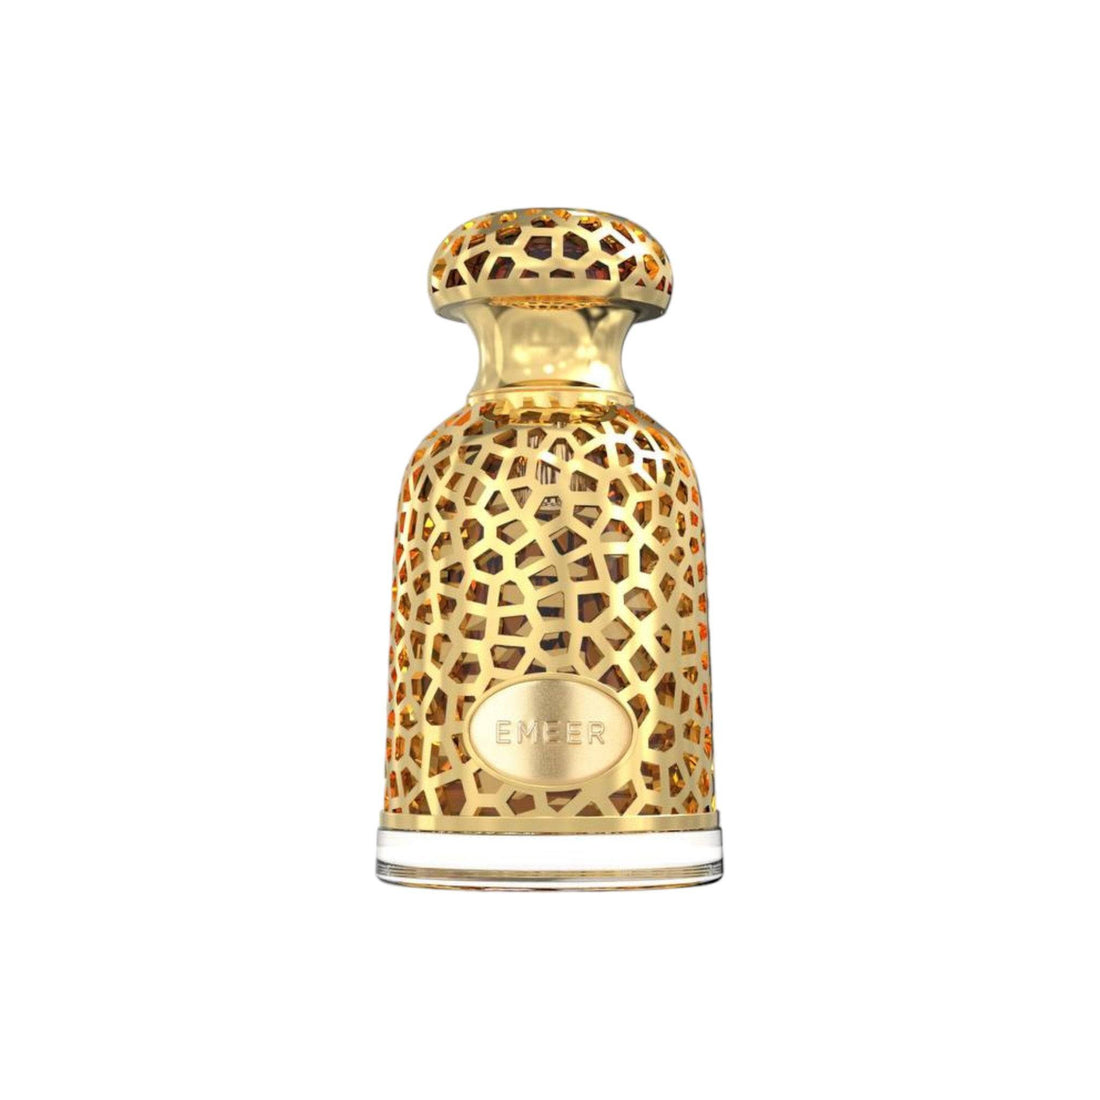 Sophisticated Emeer perfume bottle by Lattafa, showcasing luxury and elegance.